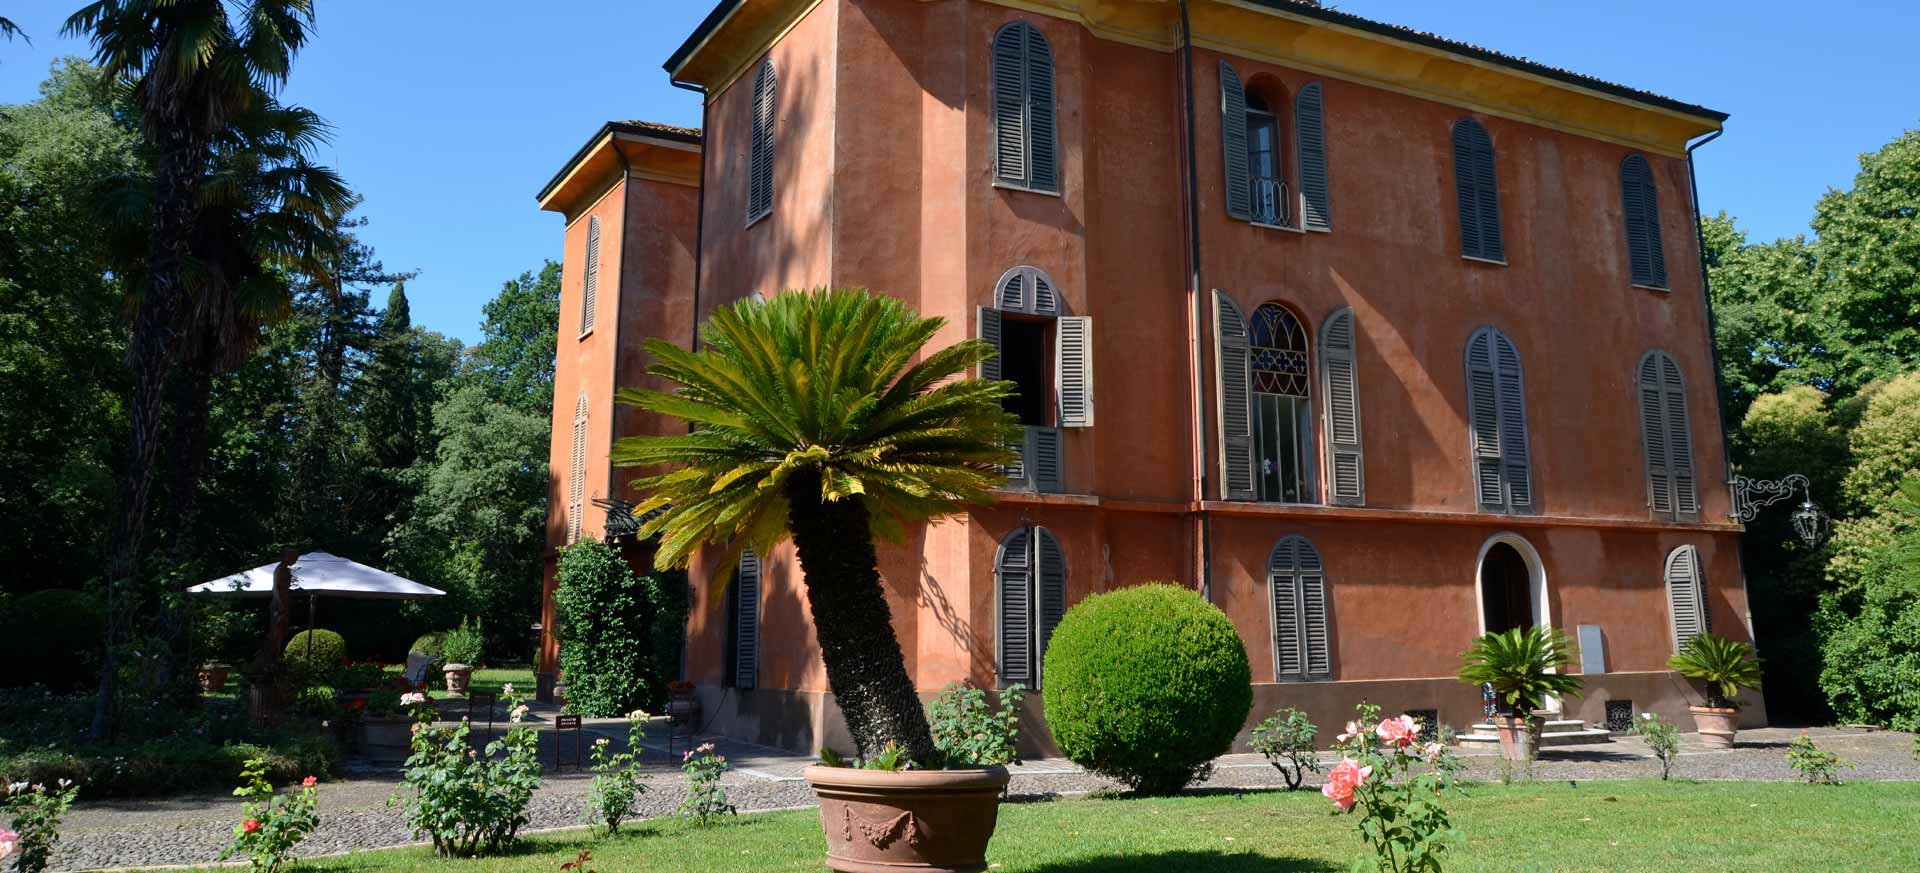 Charming guest house Reggio Emilia